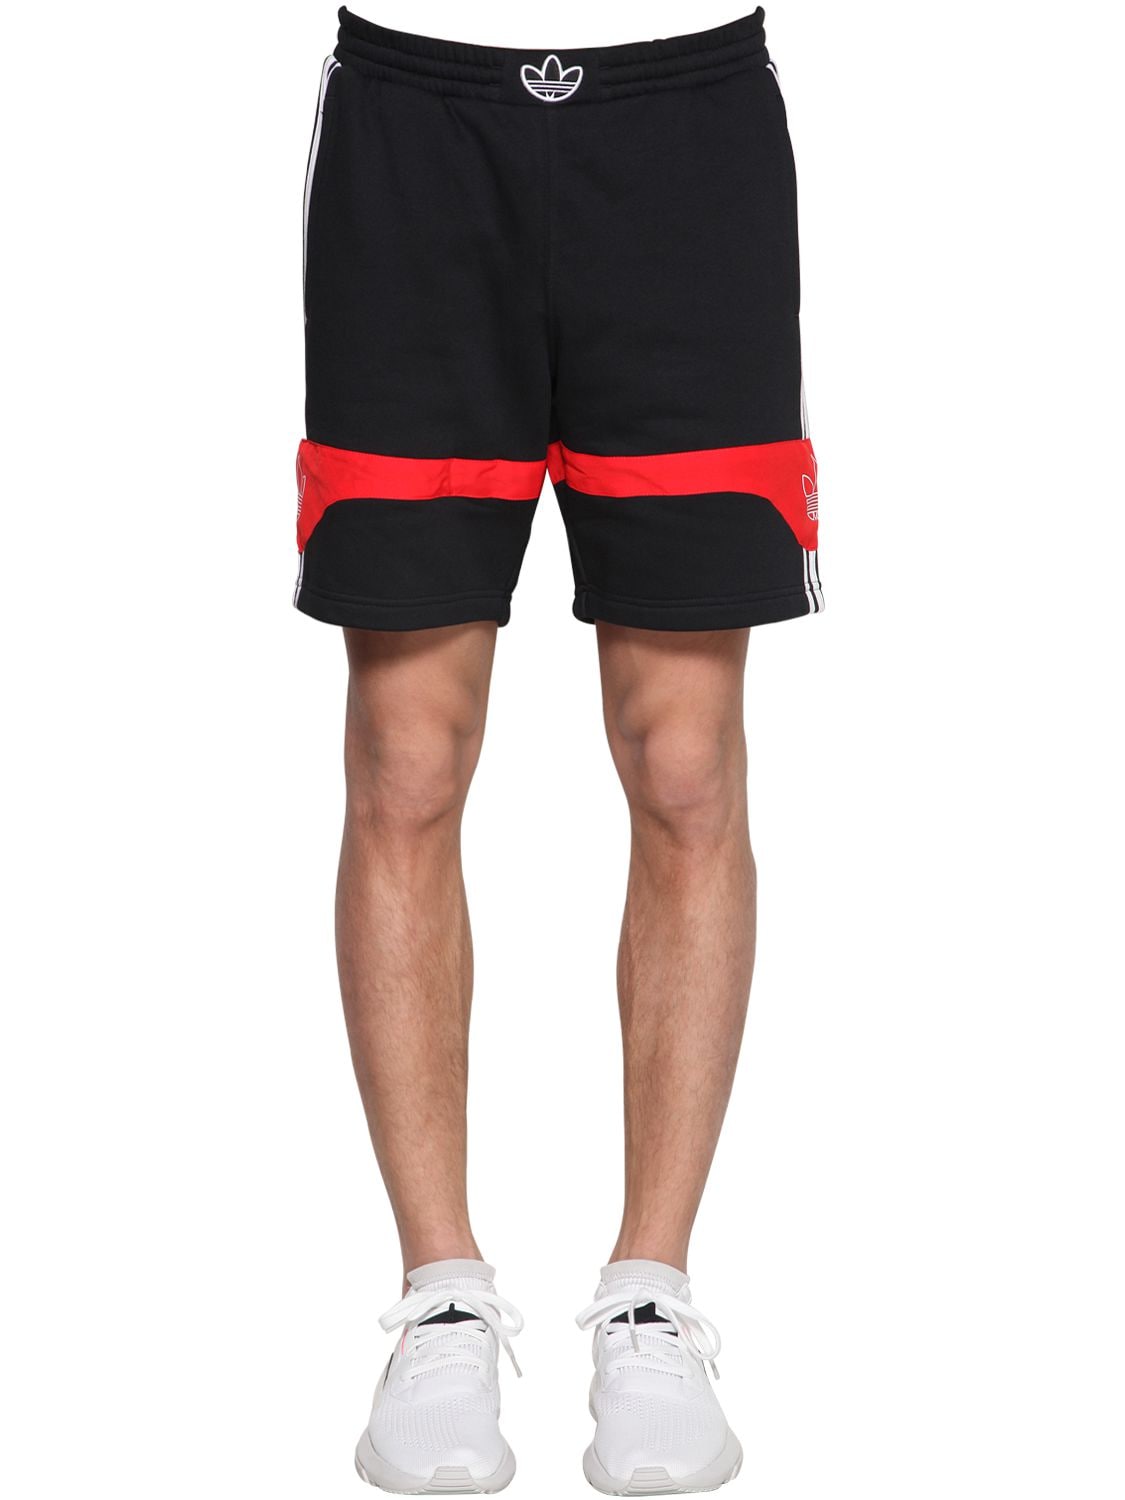 adidas black and red shorts